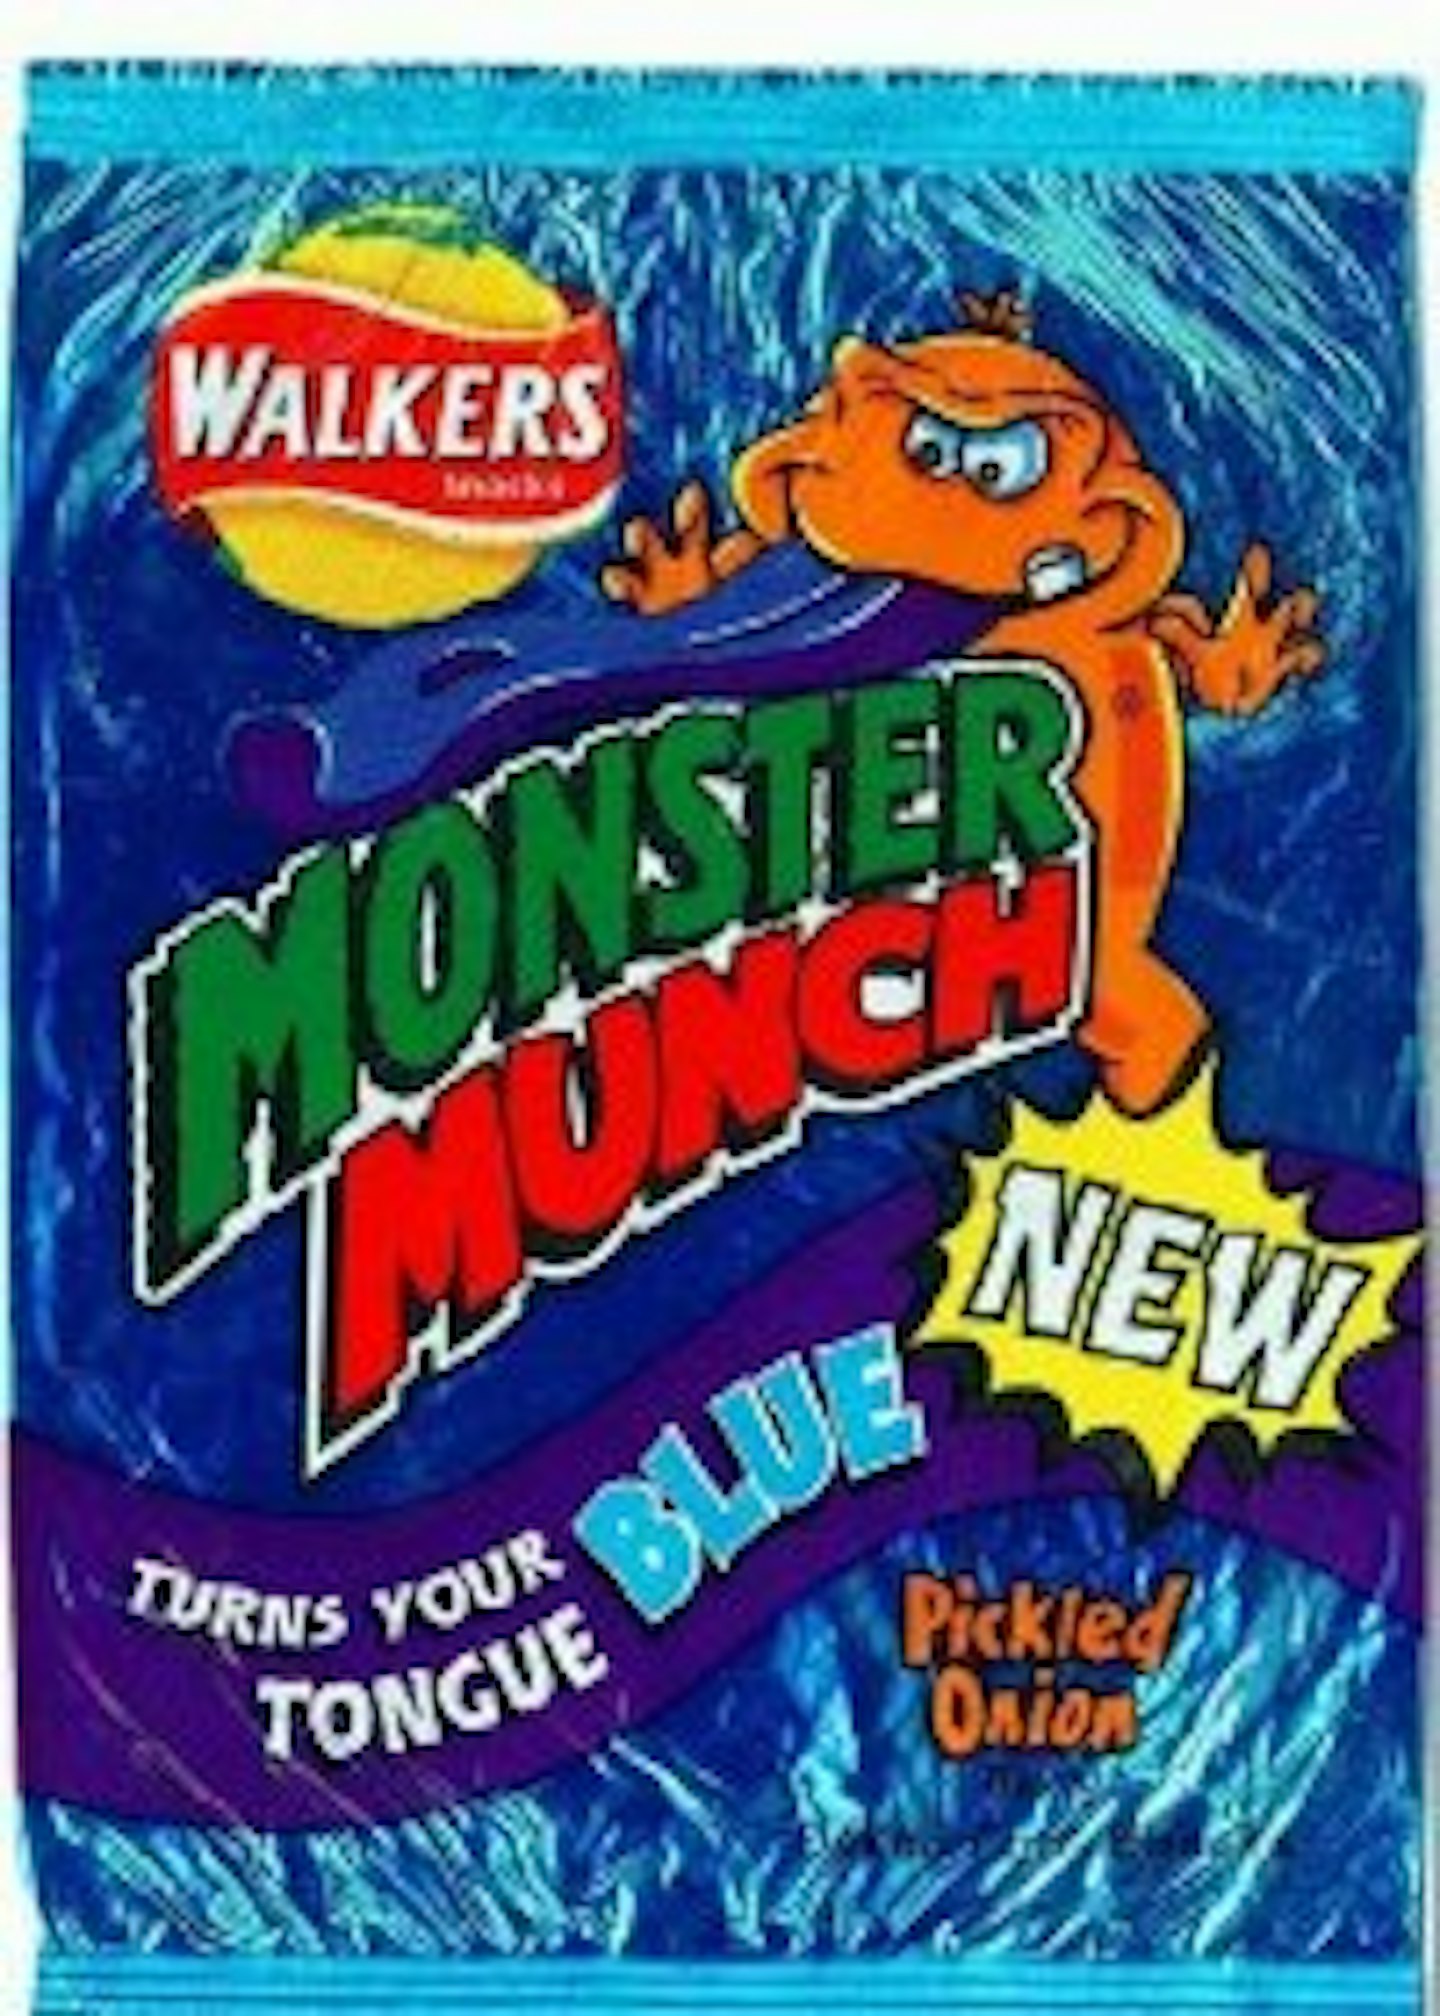 Discontinued crisps Blue Monster Munch